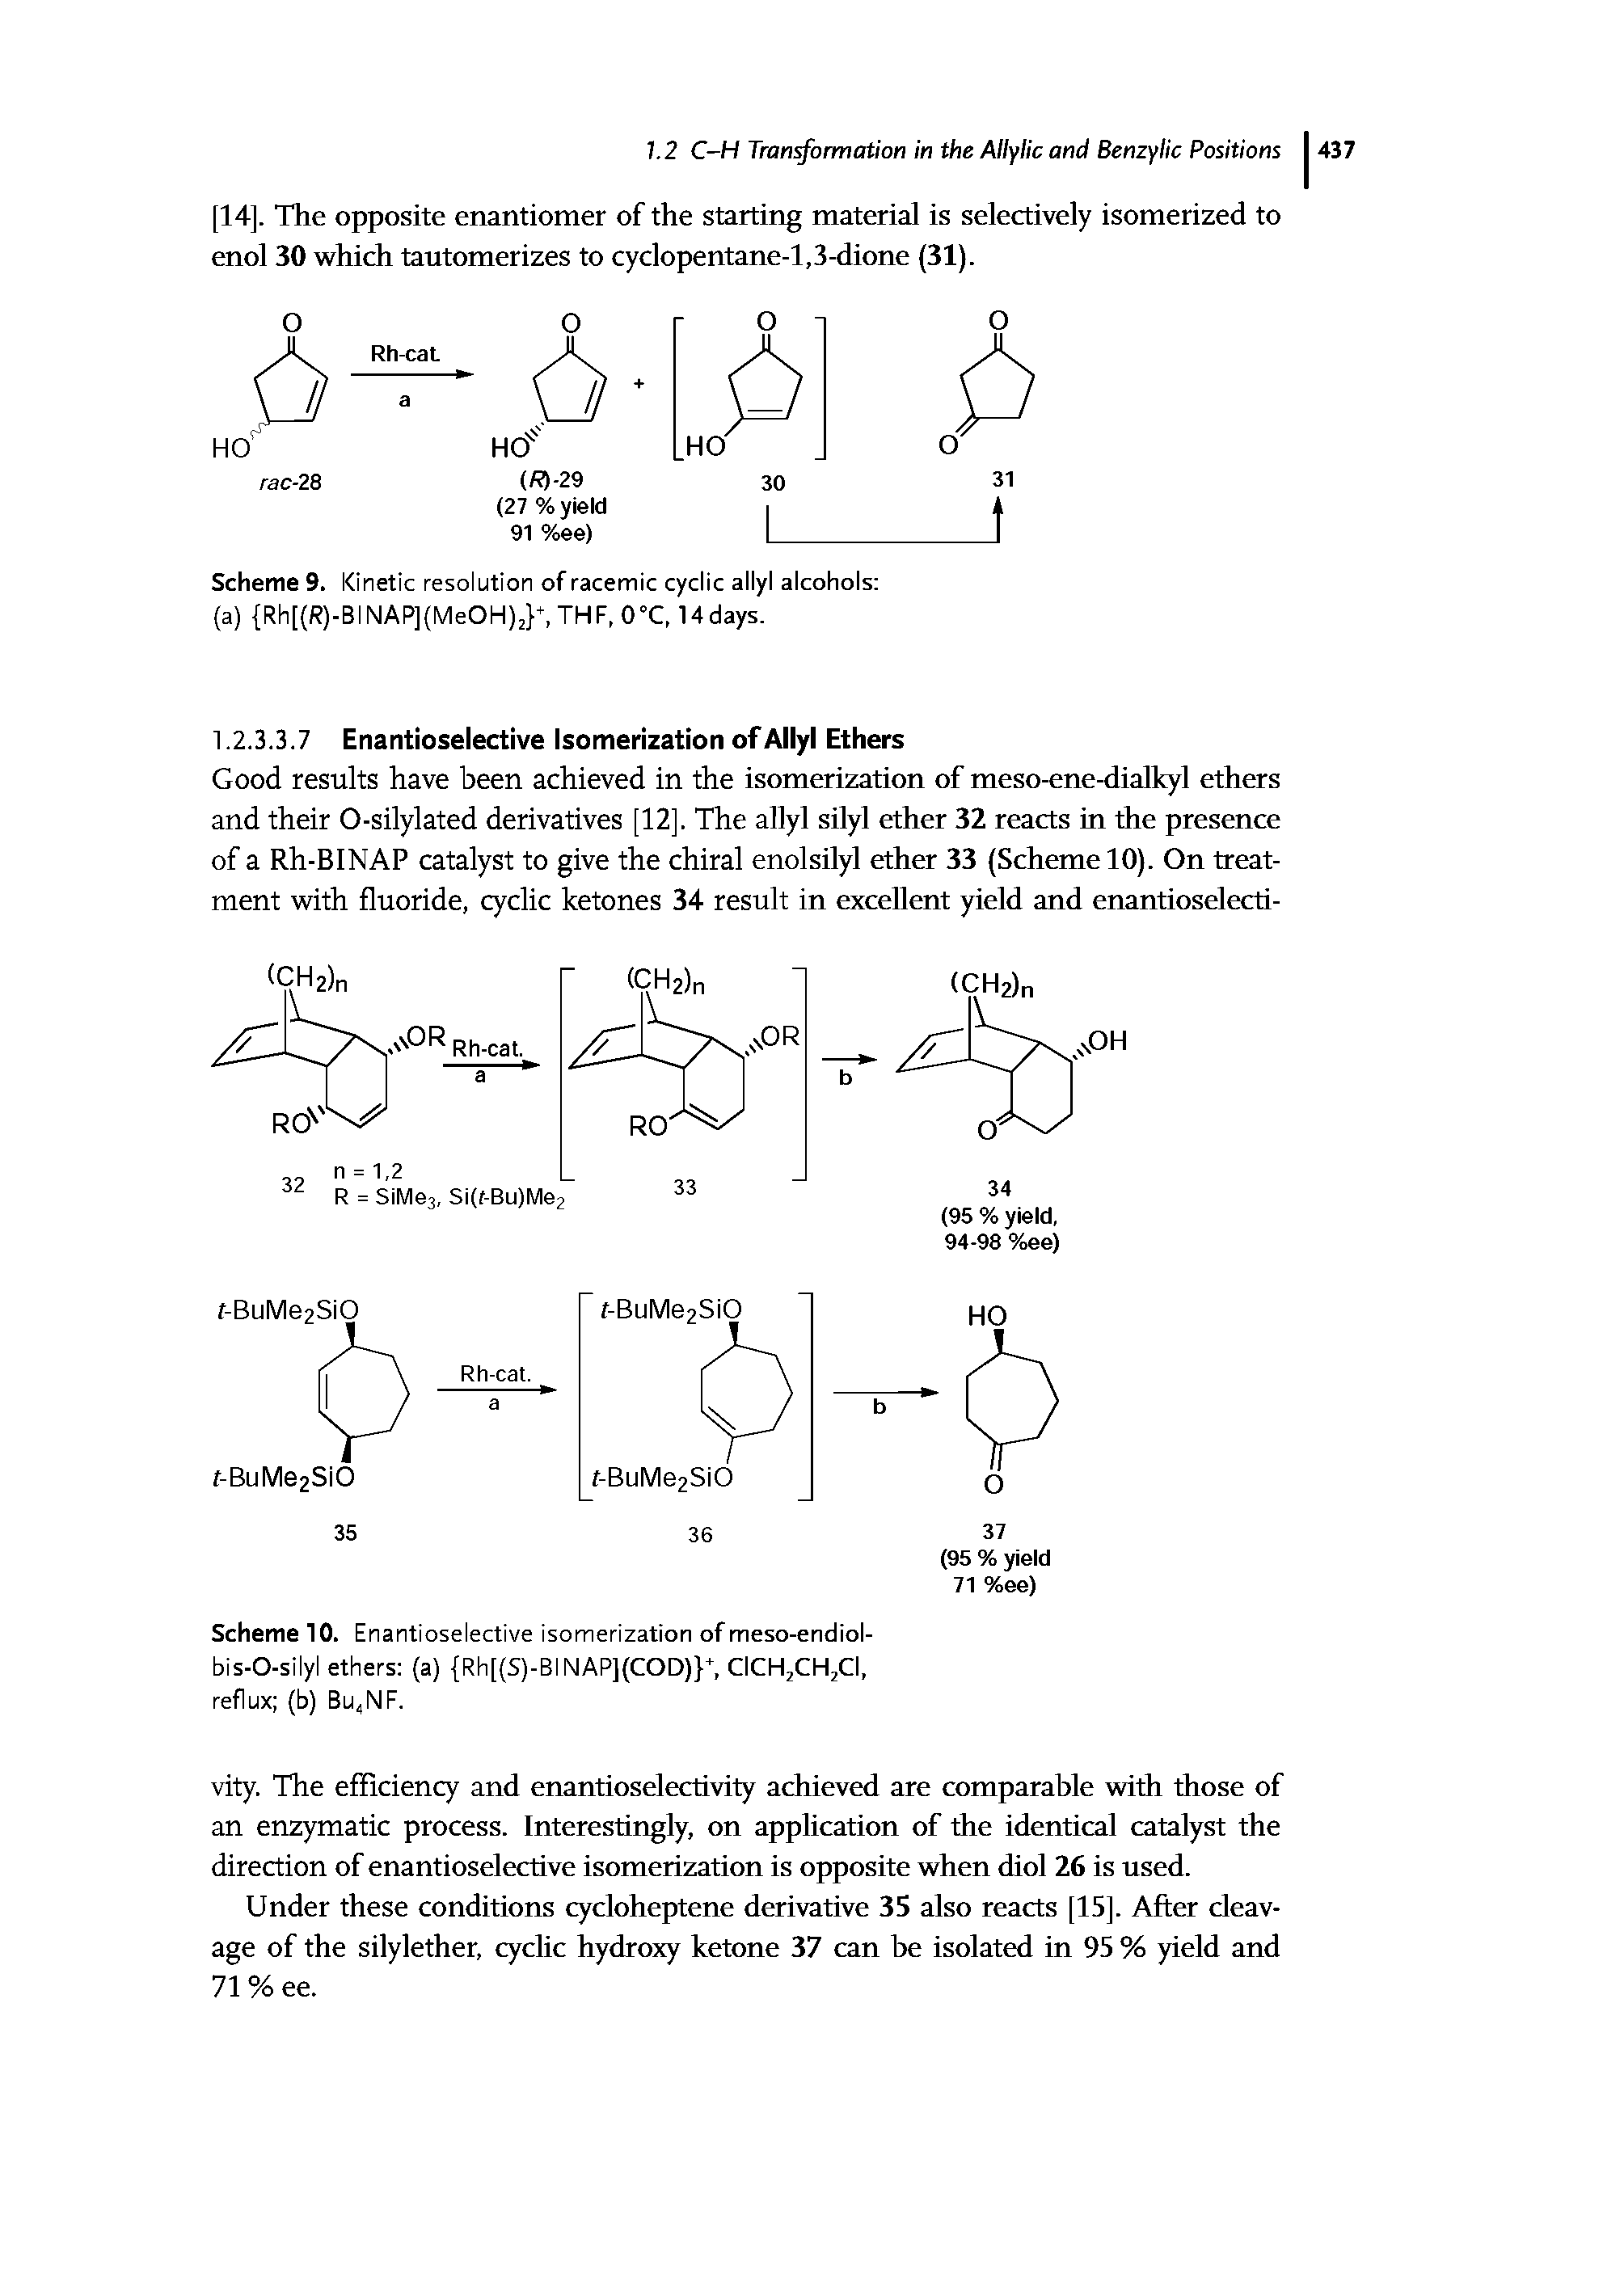 Scheme 9. Kinetic resolution of racemic cyclic allyl alcohols (a) Rh[(R)-BINAP](MeOH)2 +, THF, 0°C, 14days.